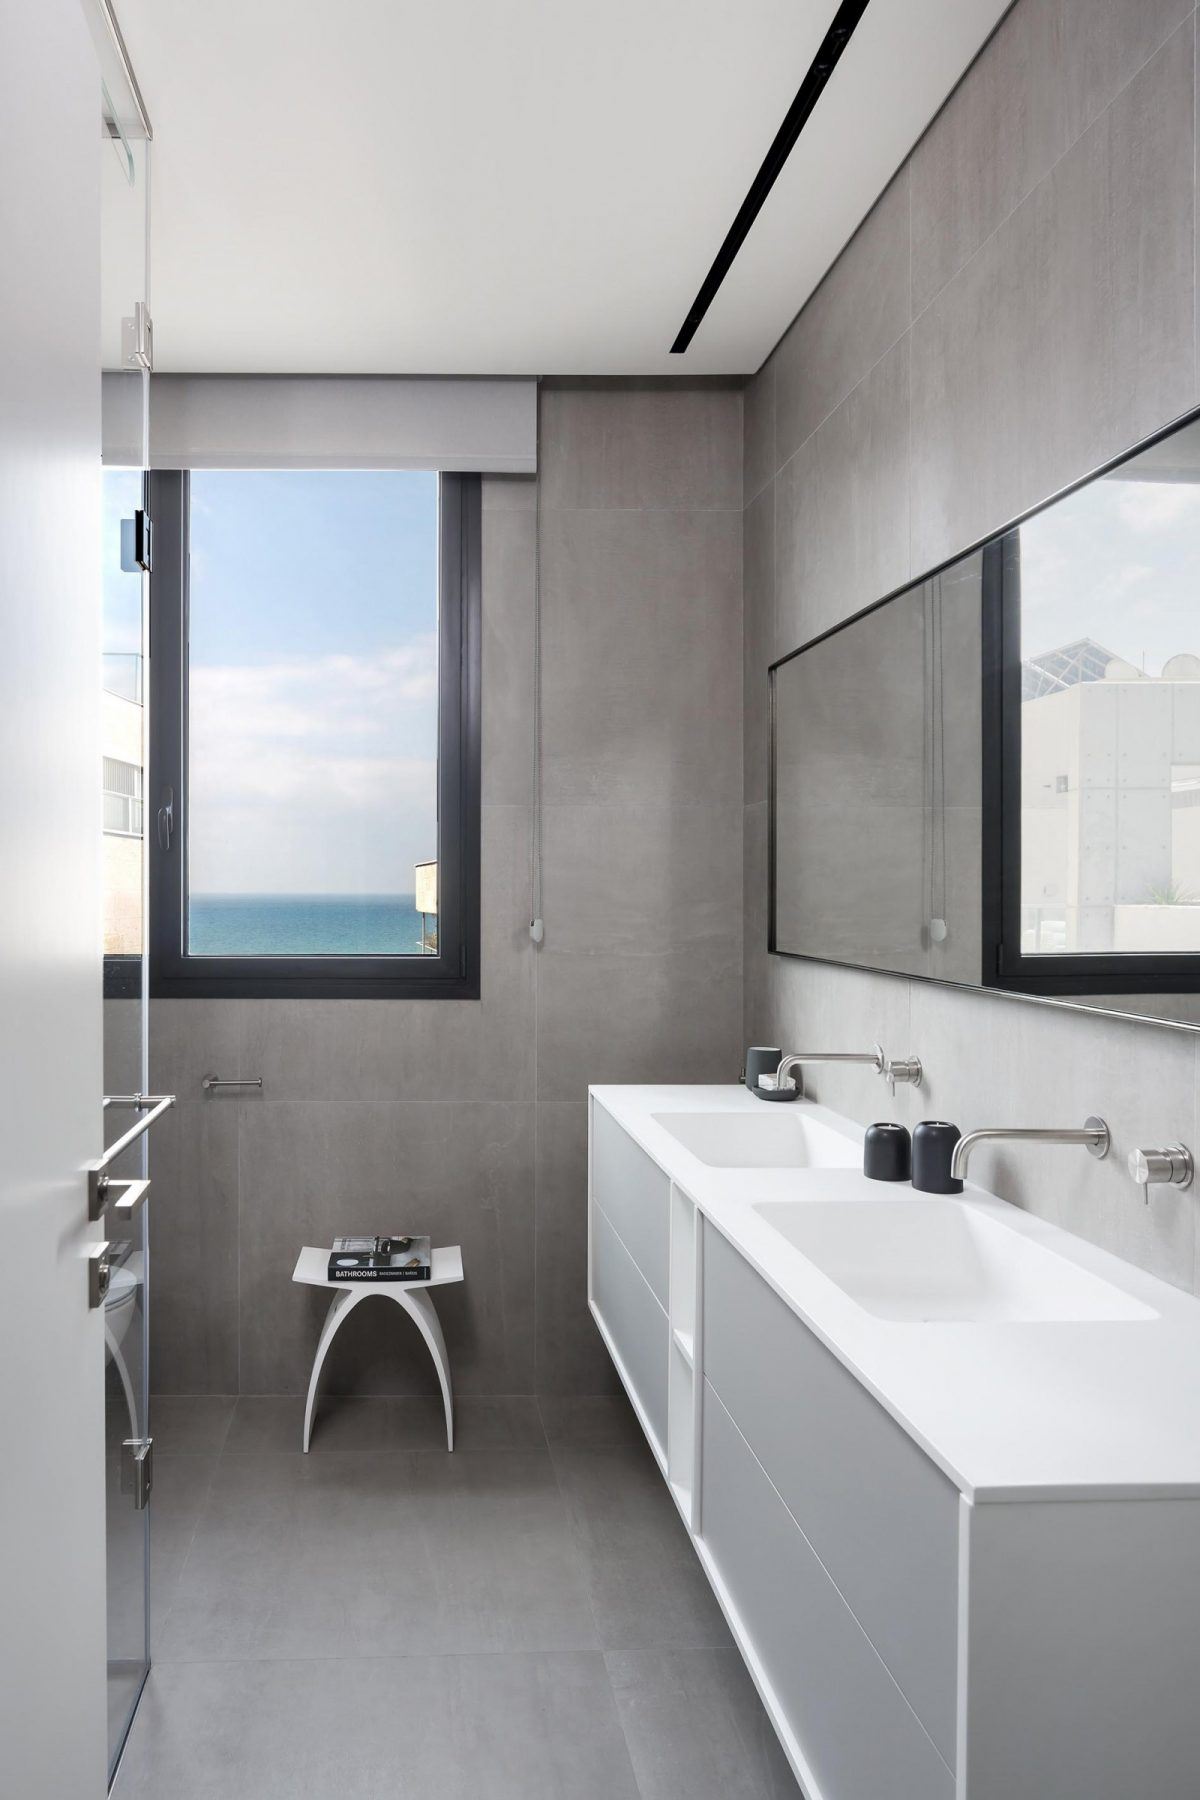 Penthouse Carmelit עיצוב התאורה במקלחת נעשתה על ידי קמחי דורי